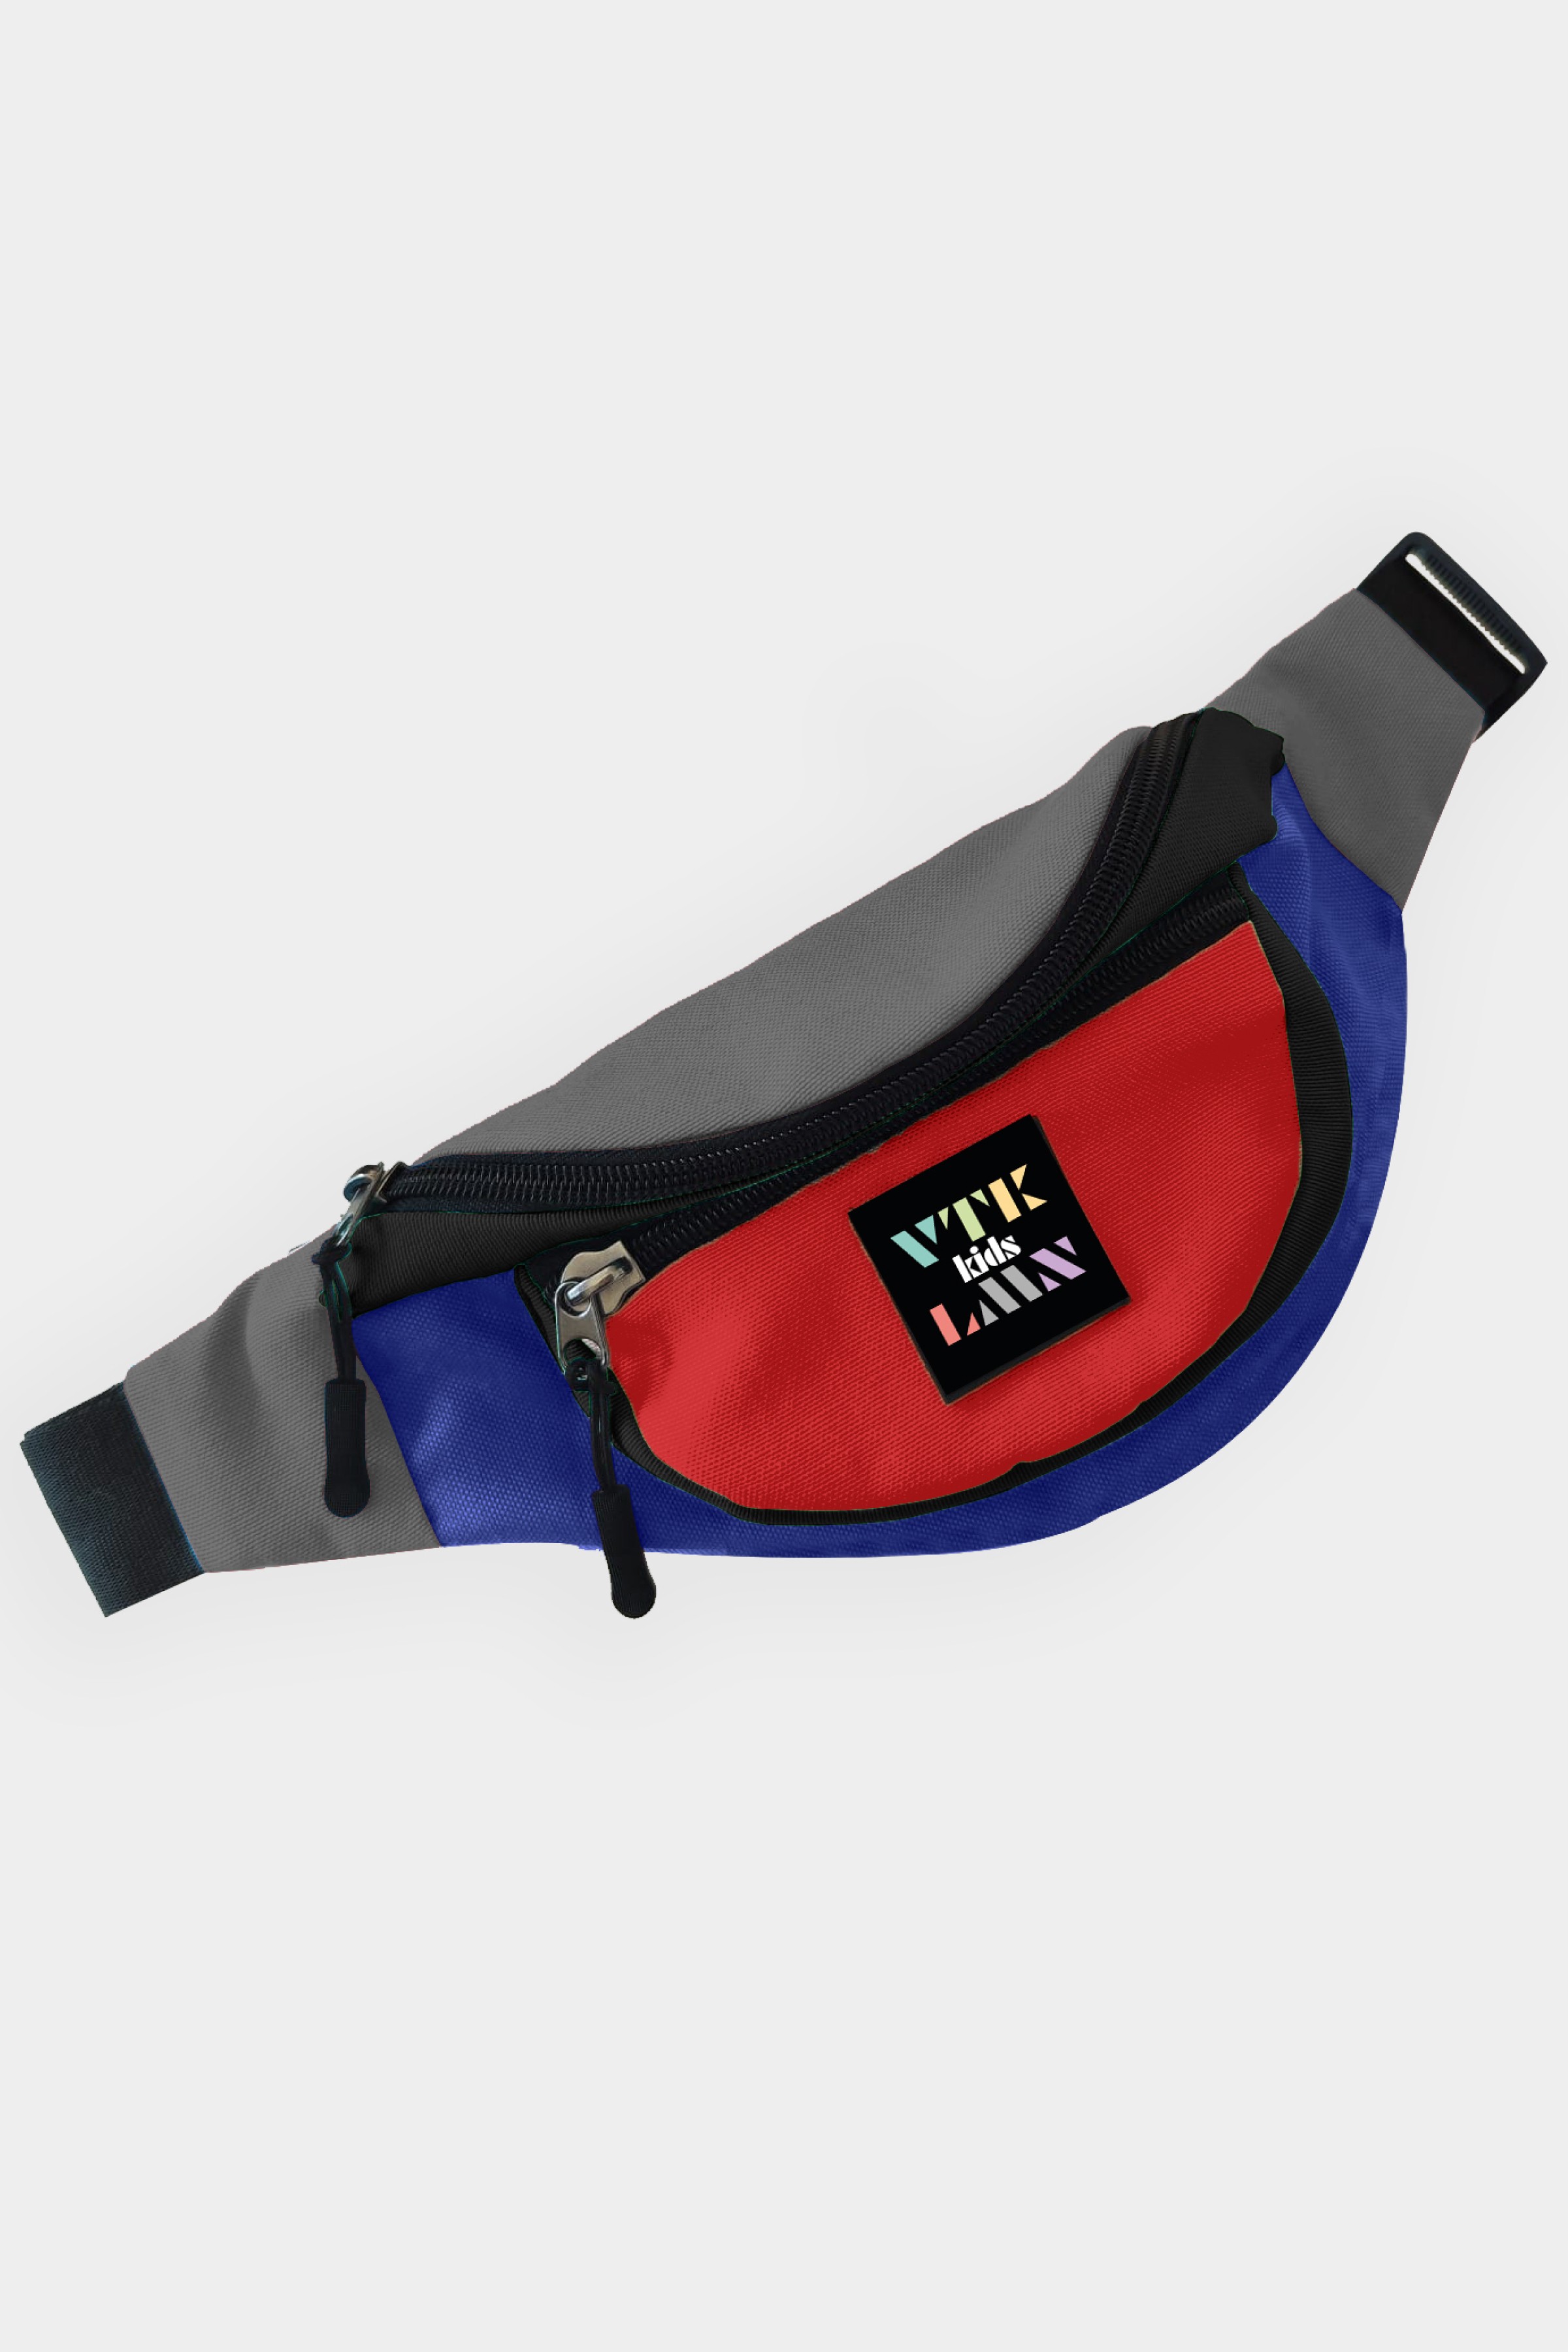 Colorful Shoulder and Waist Kid Bag - Red Black Blue Gray